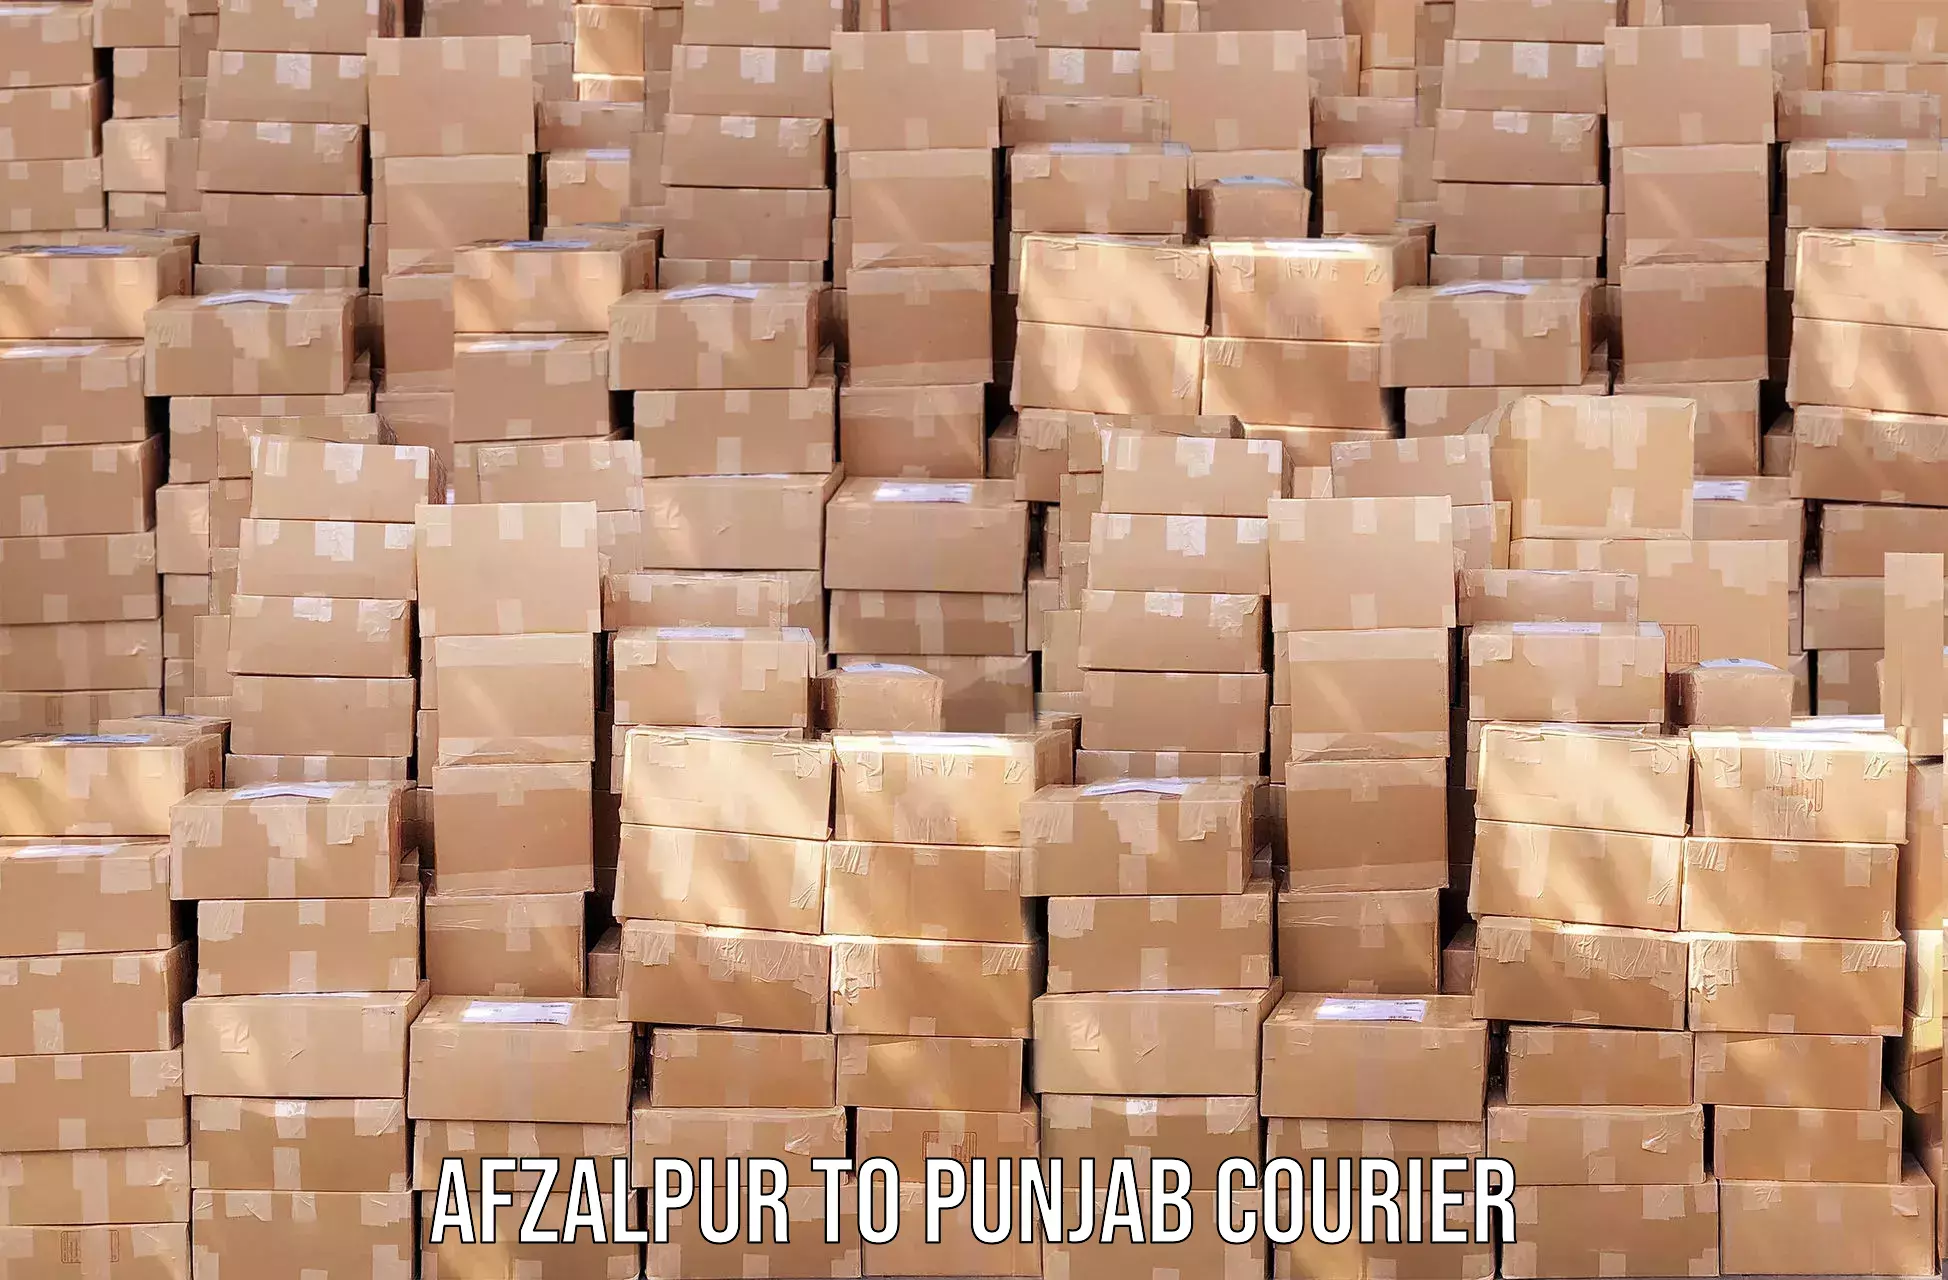 Digital shipping tools Afzalpur to Talwara